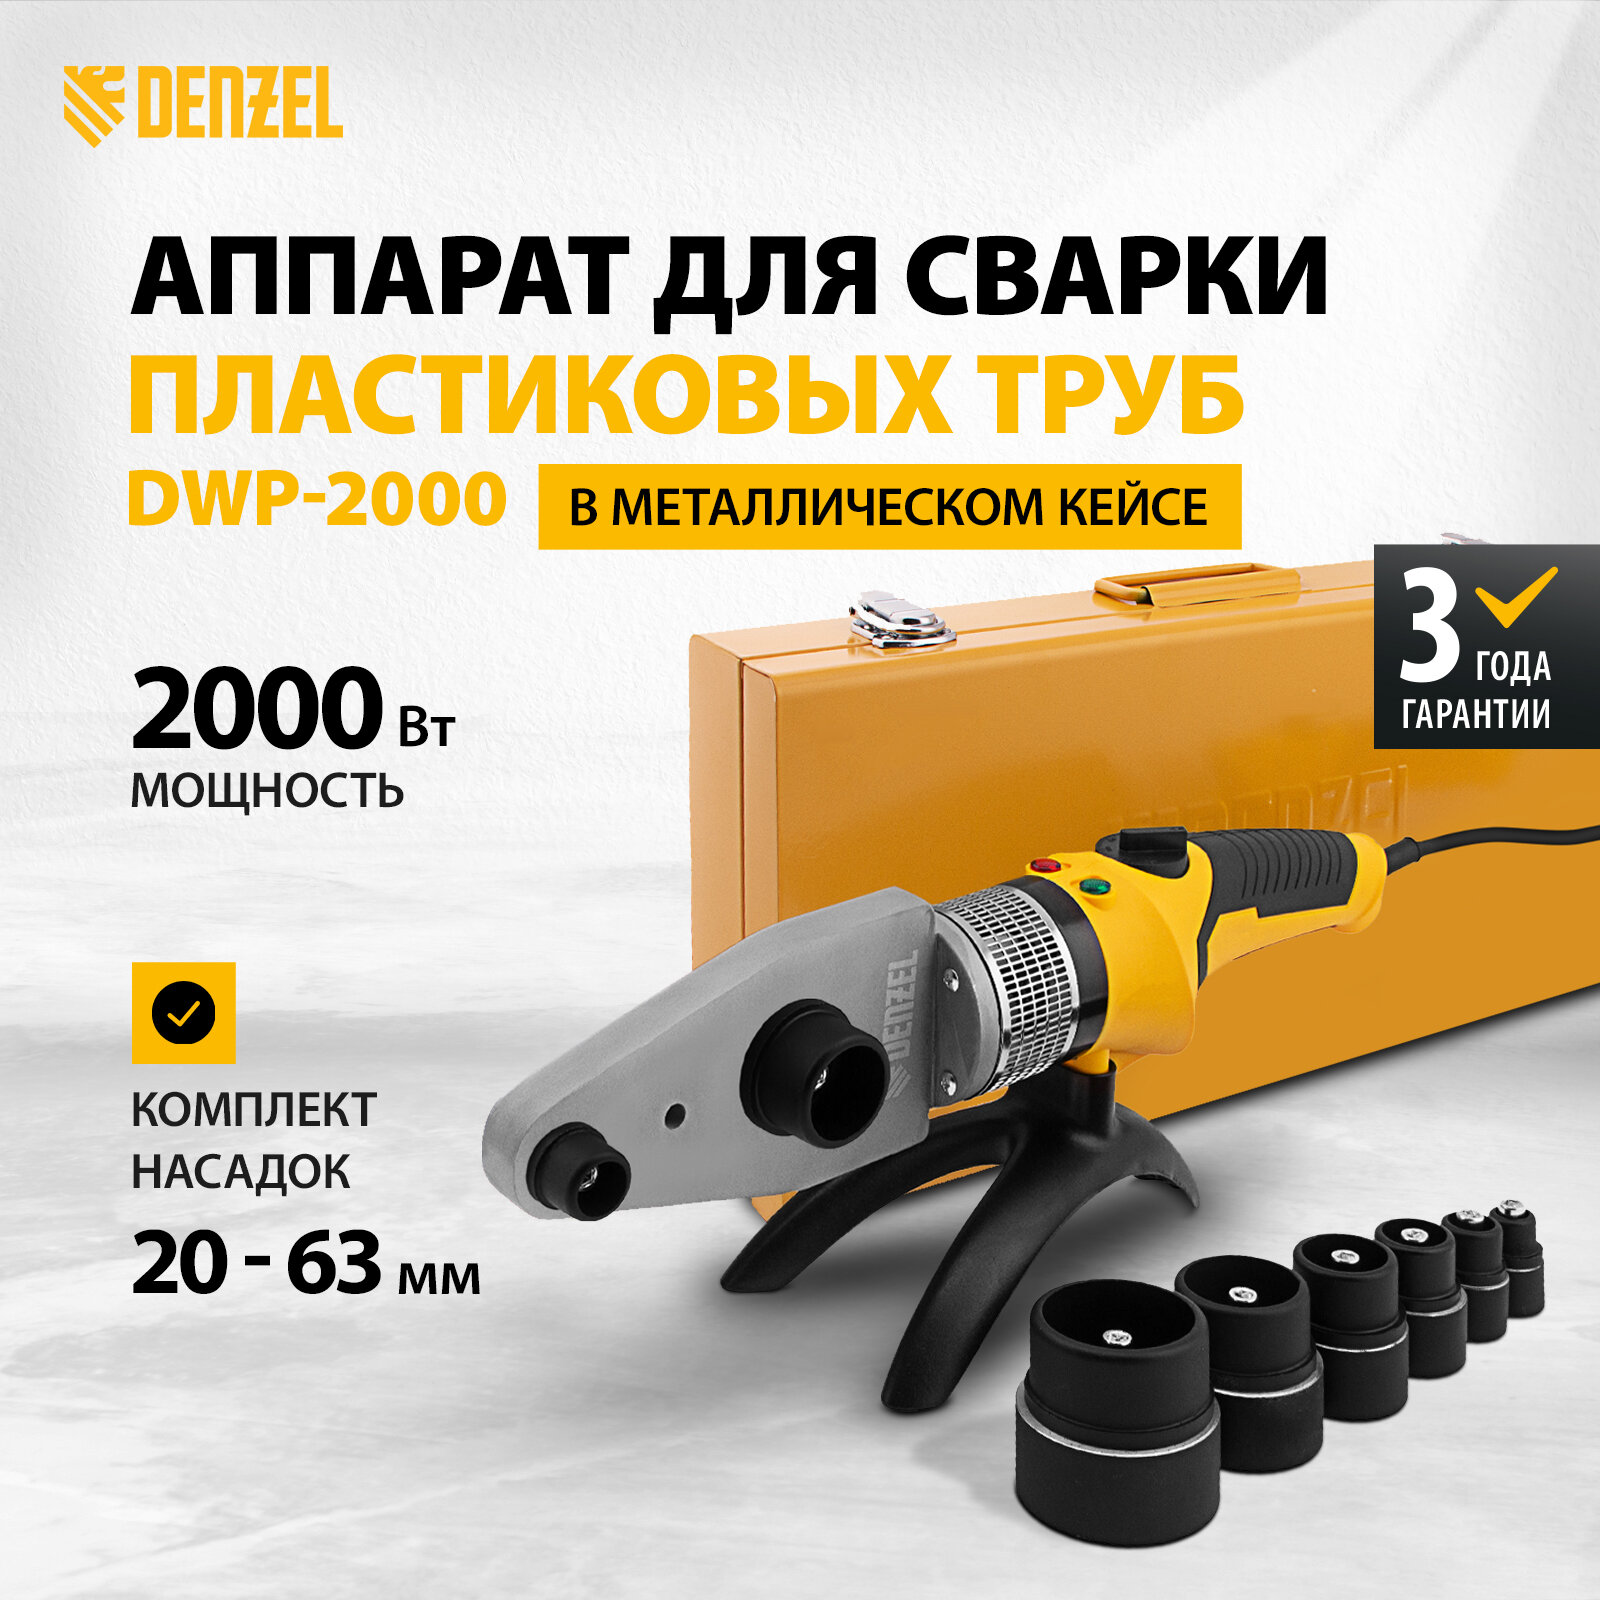 Аппарат для сварки пластиковых труб DWP-2000, Х-Pro, 2000 Вт, 300 град, комплект насадок, 20-63 мм Denzel Denzel